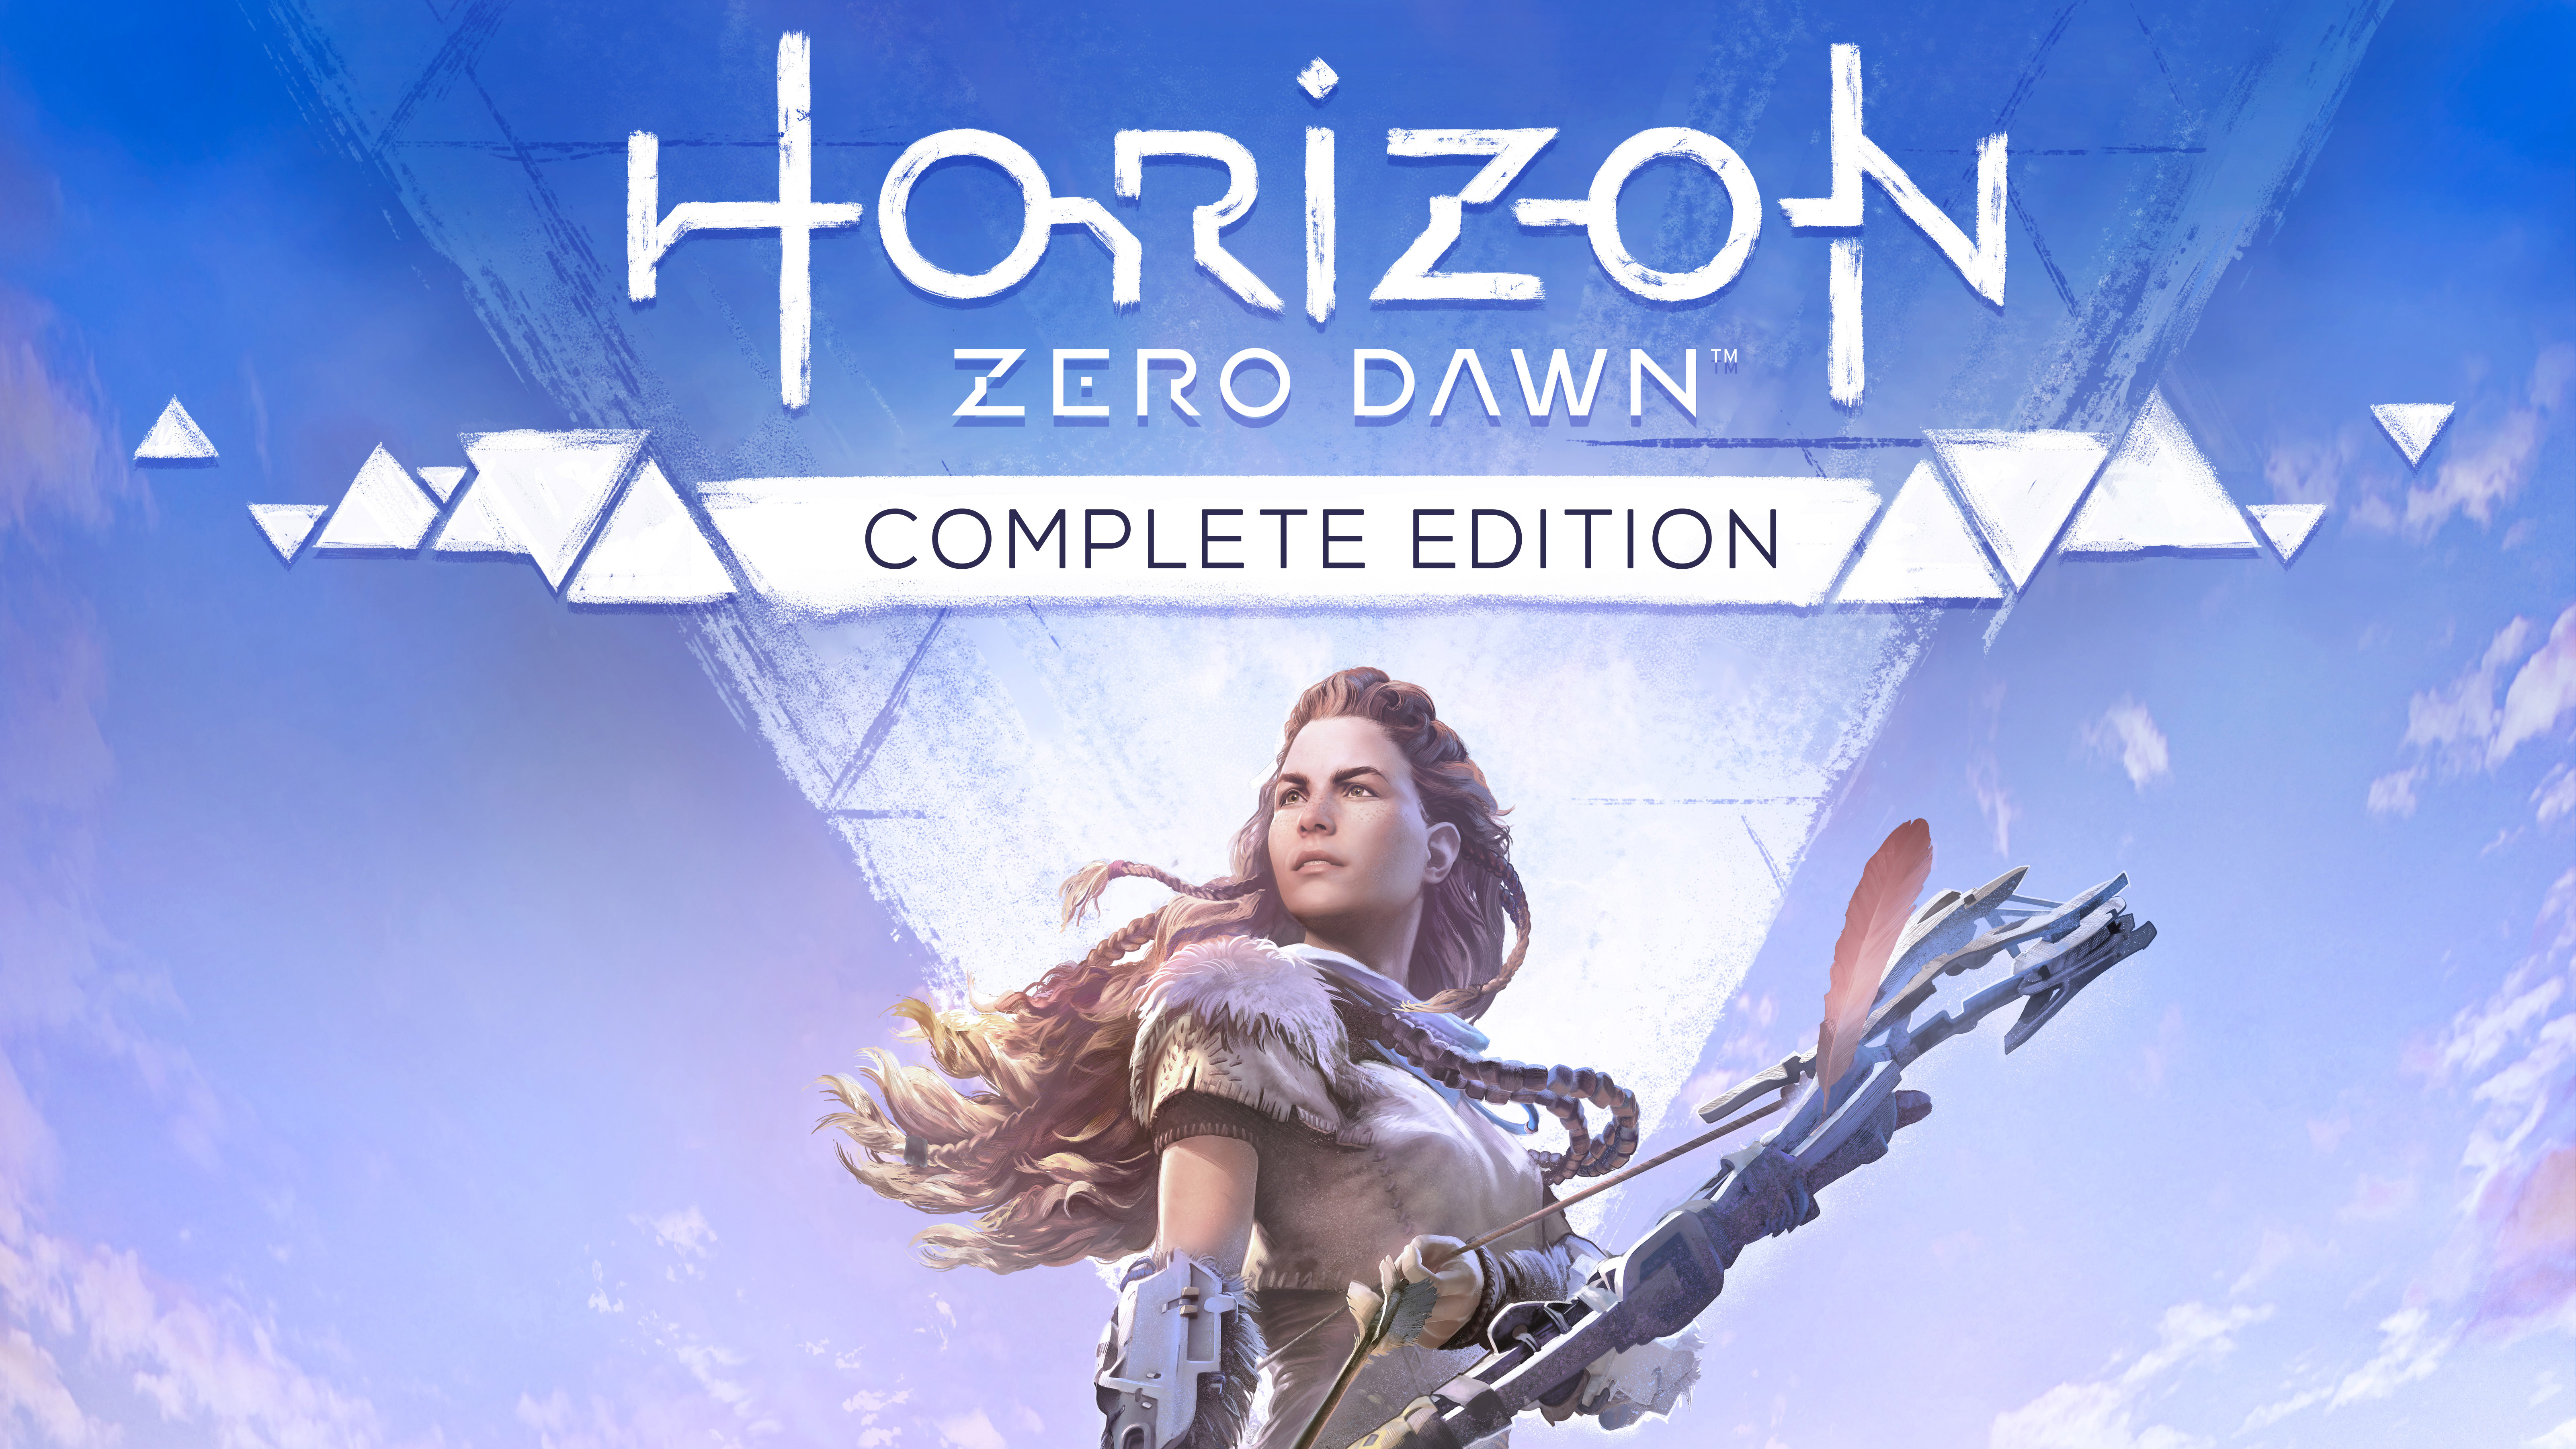 Wallpapers games 2017 Horizon Zero Dawn Xbox games on the desktop